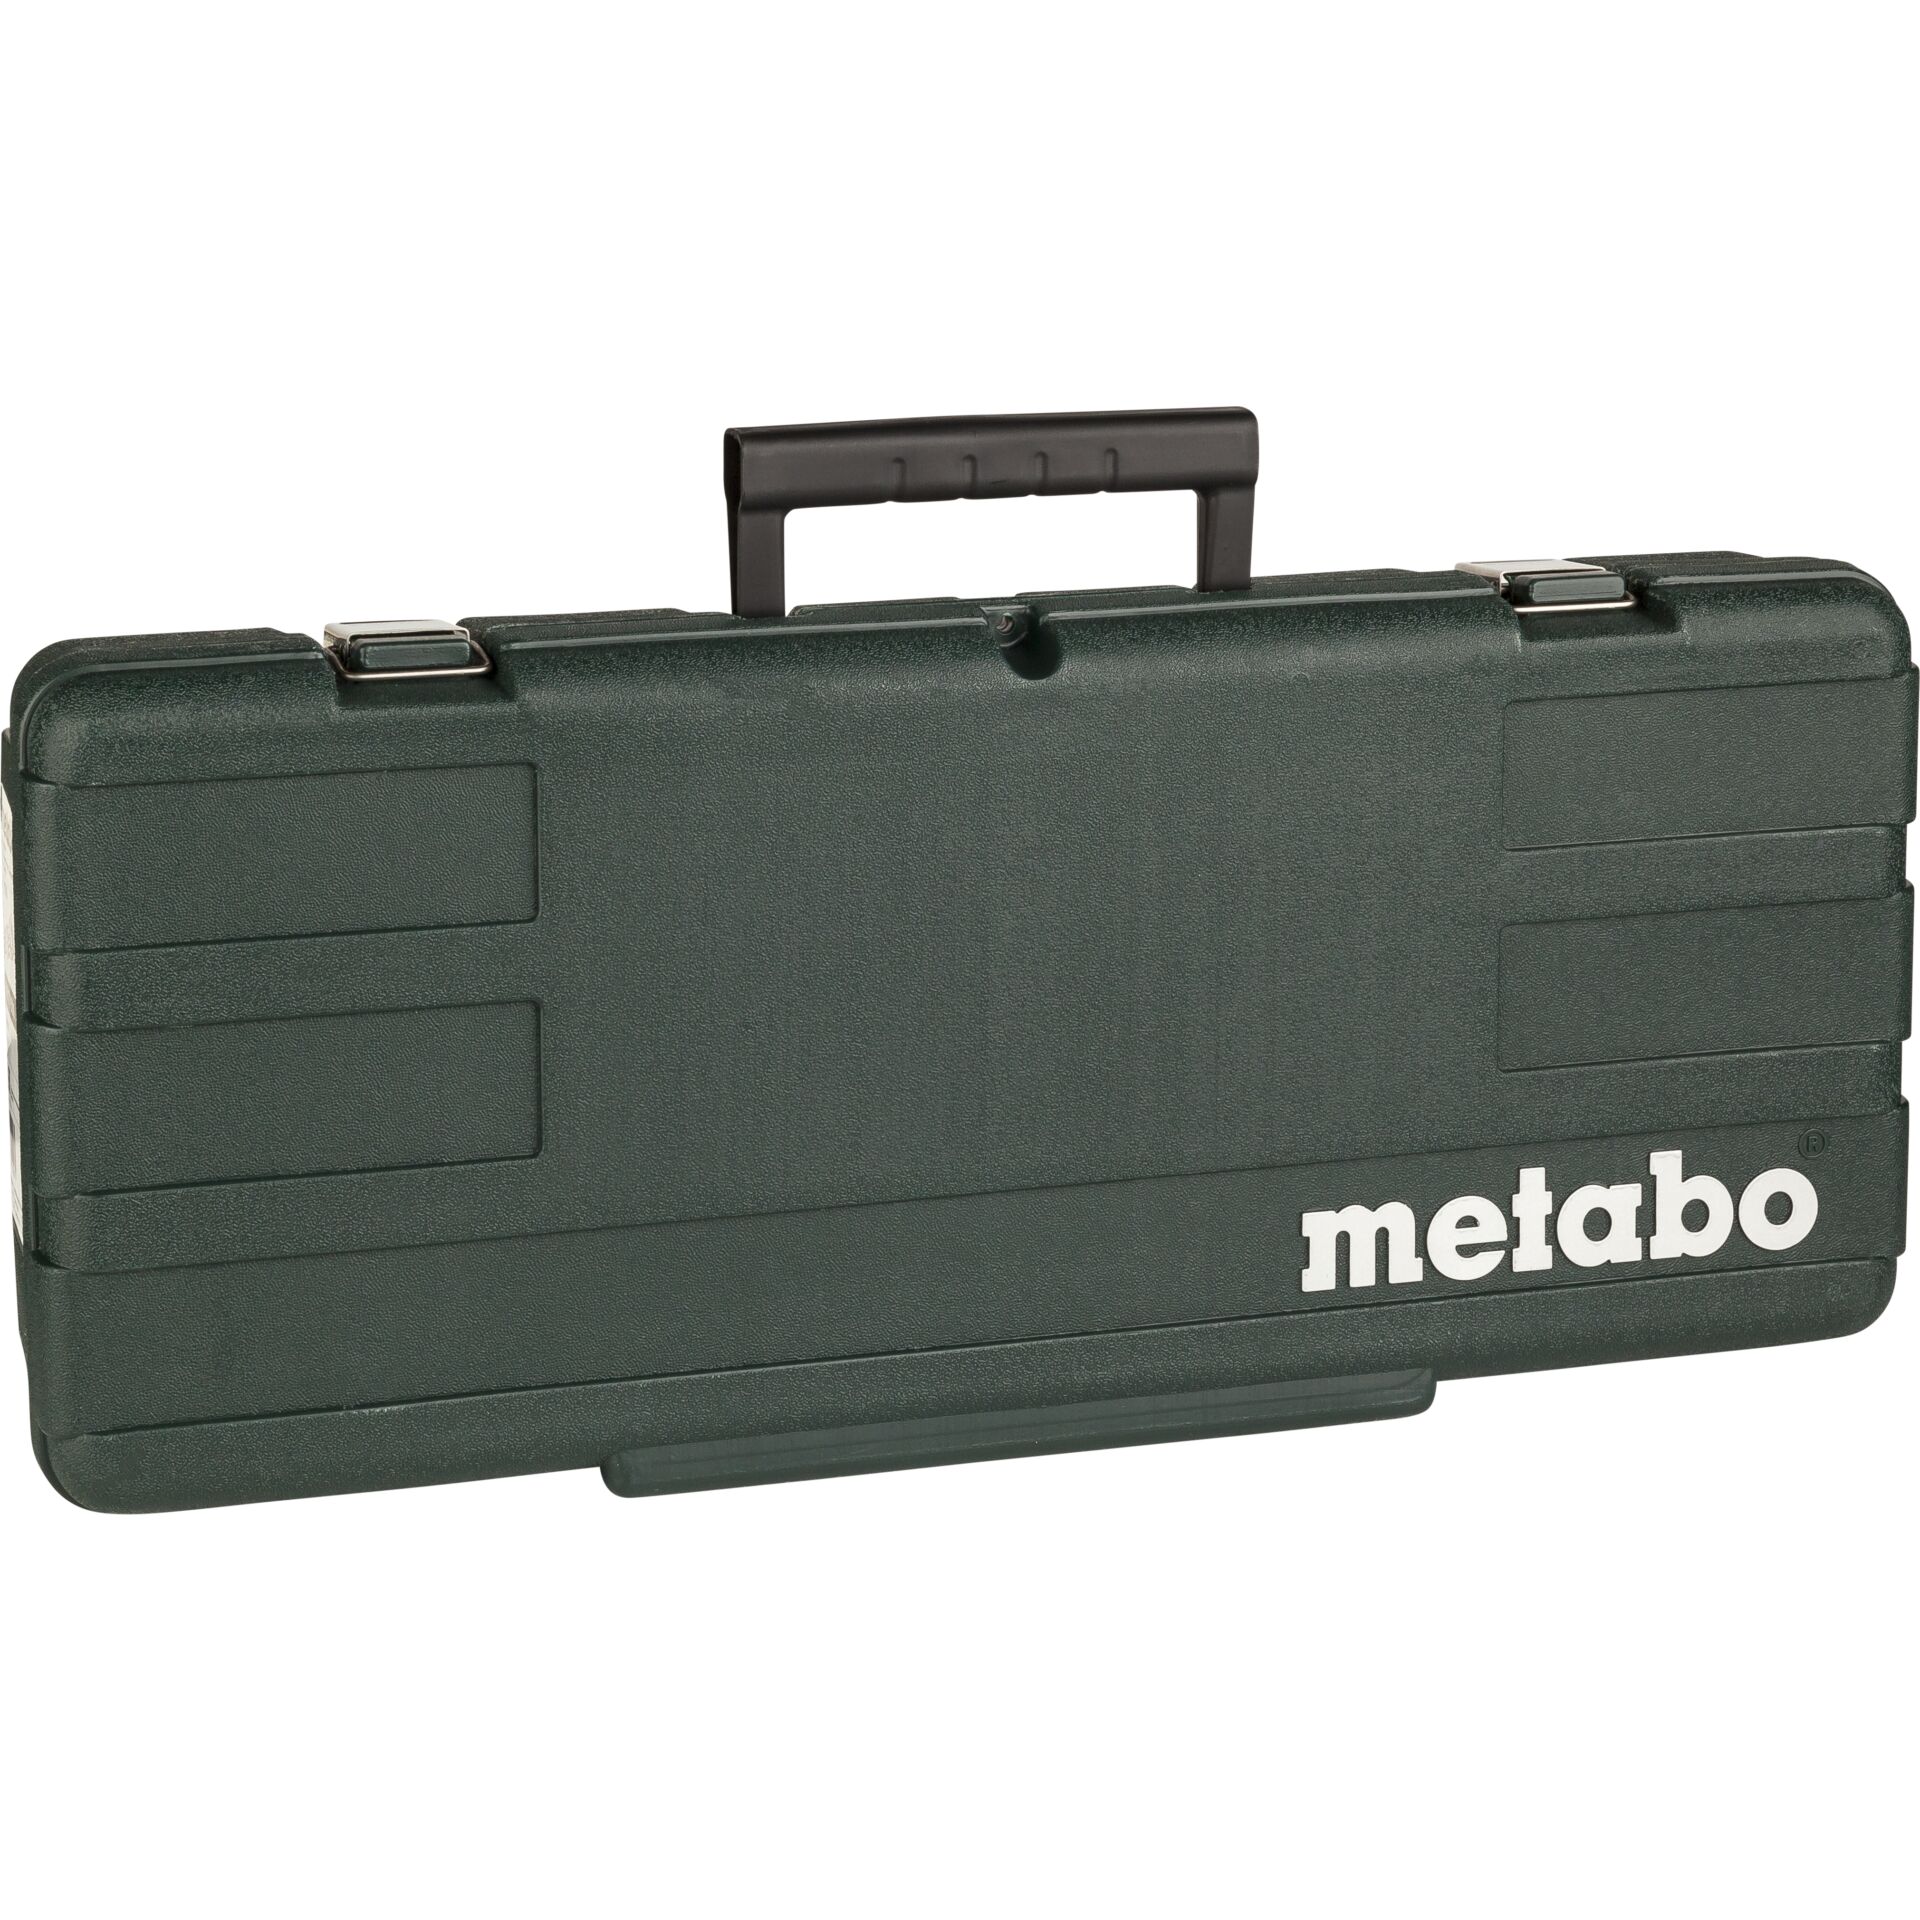 Hardware/Electronic -Metabo W Hub-Länge Säbelsäge Metabo 1100 28 (606177500) -SSE mm 1100